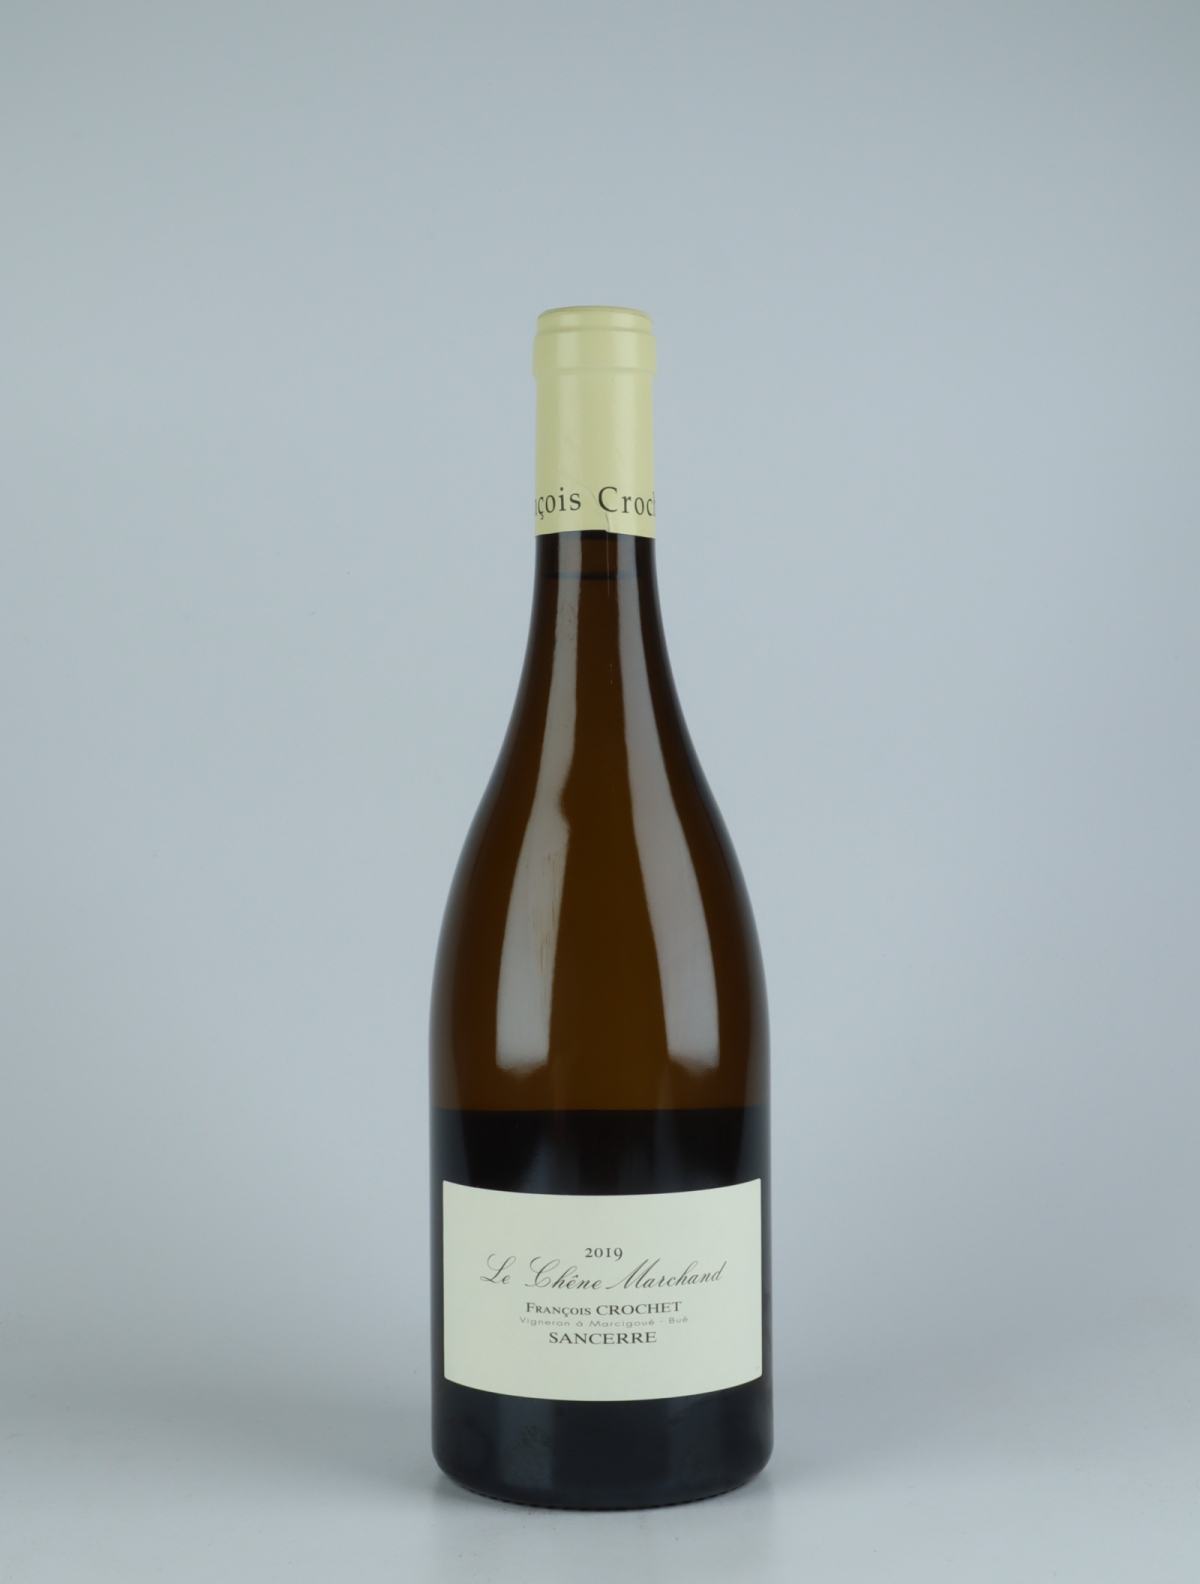 A bottle 2019 Sancerre - Le Chêne Marchand White wine from François Crochet, Loire in France